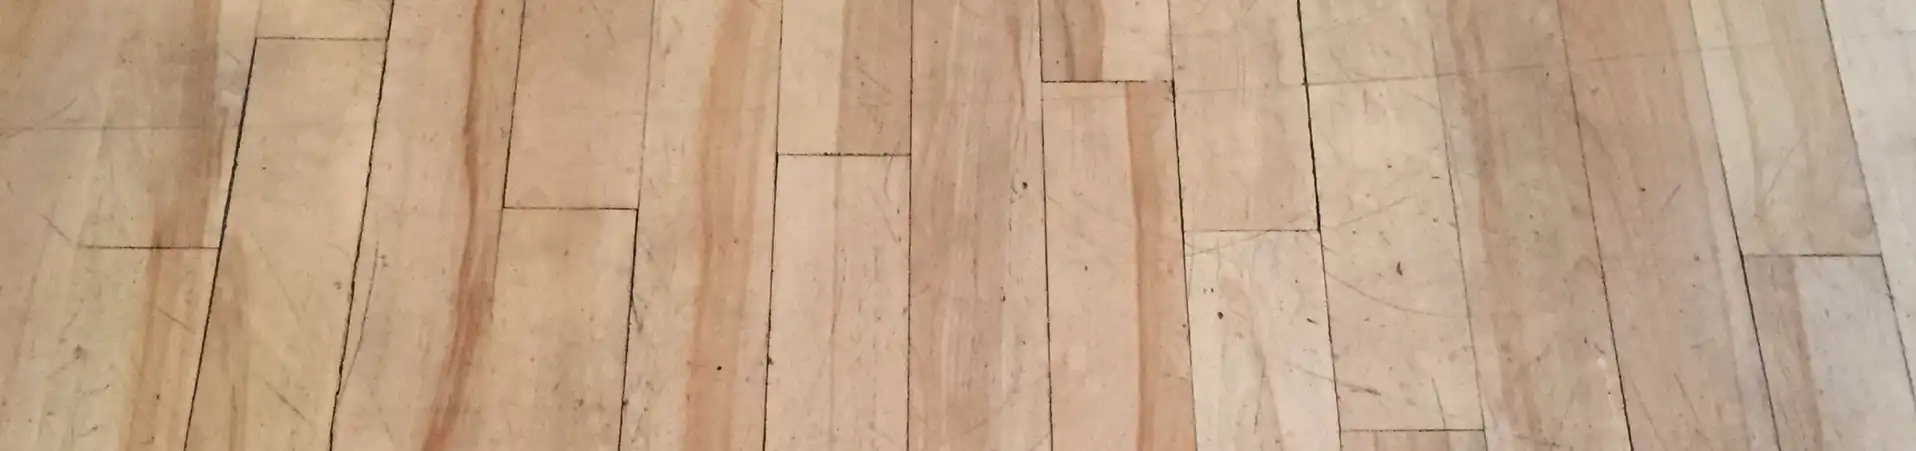 Photo of rough wood floor